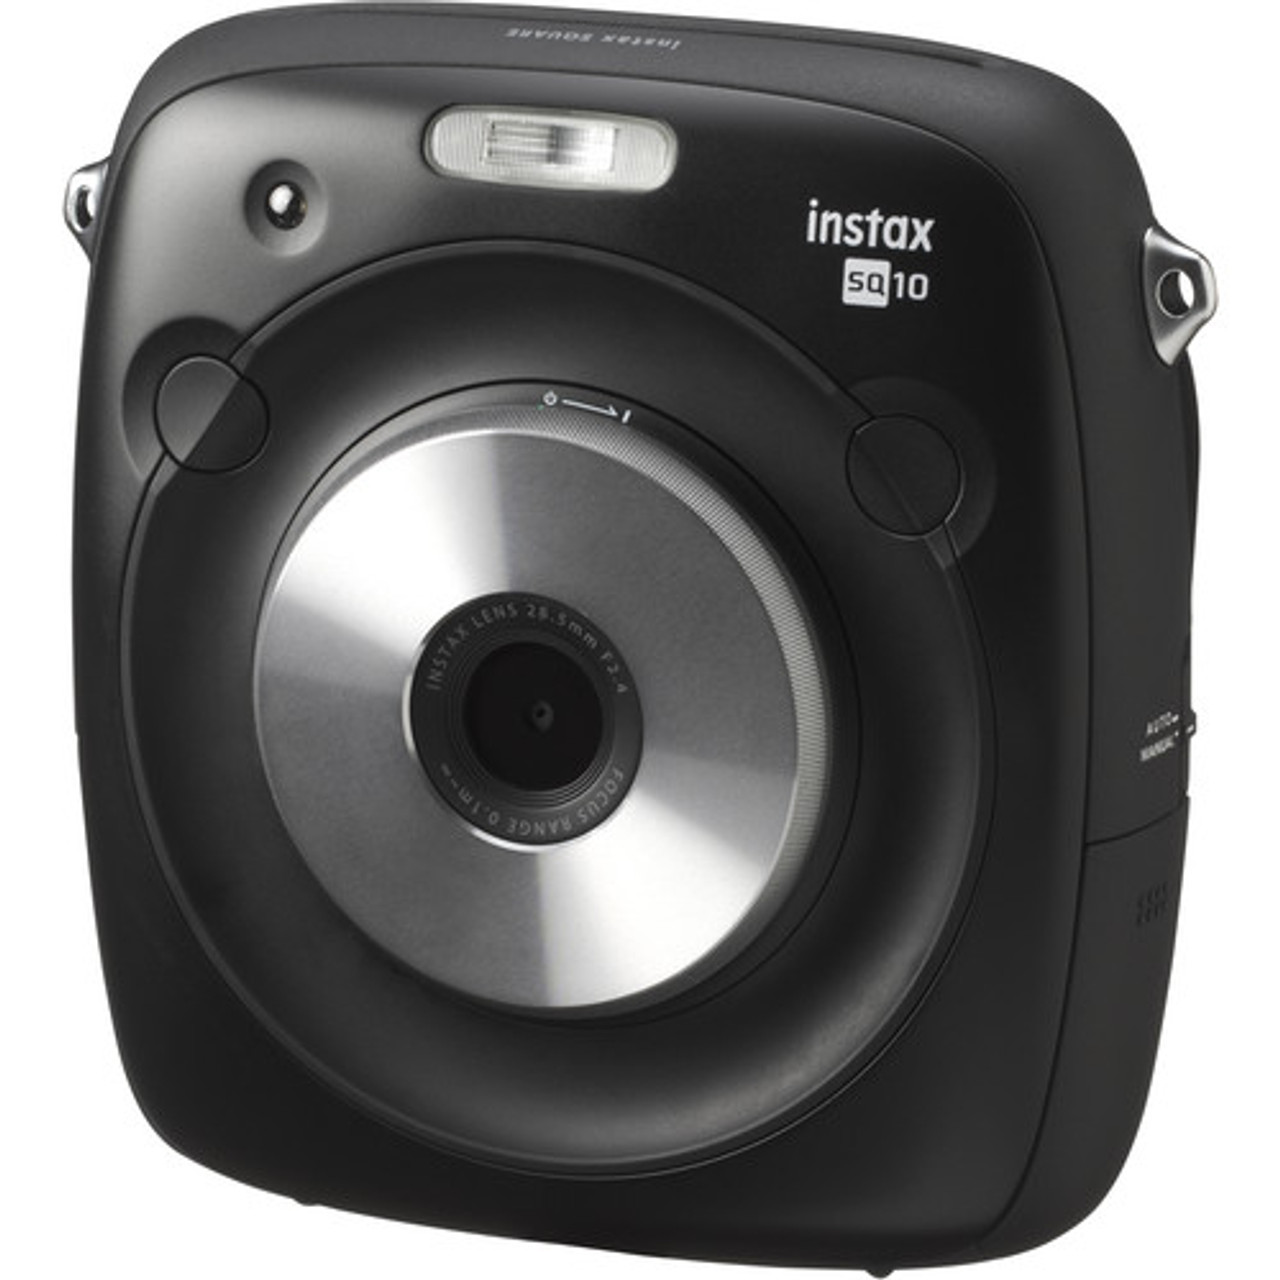 Fujifilm Instax SQ10 Hybrid Camera | Bedfords.com